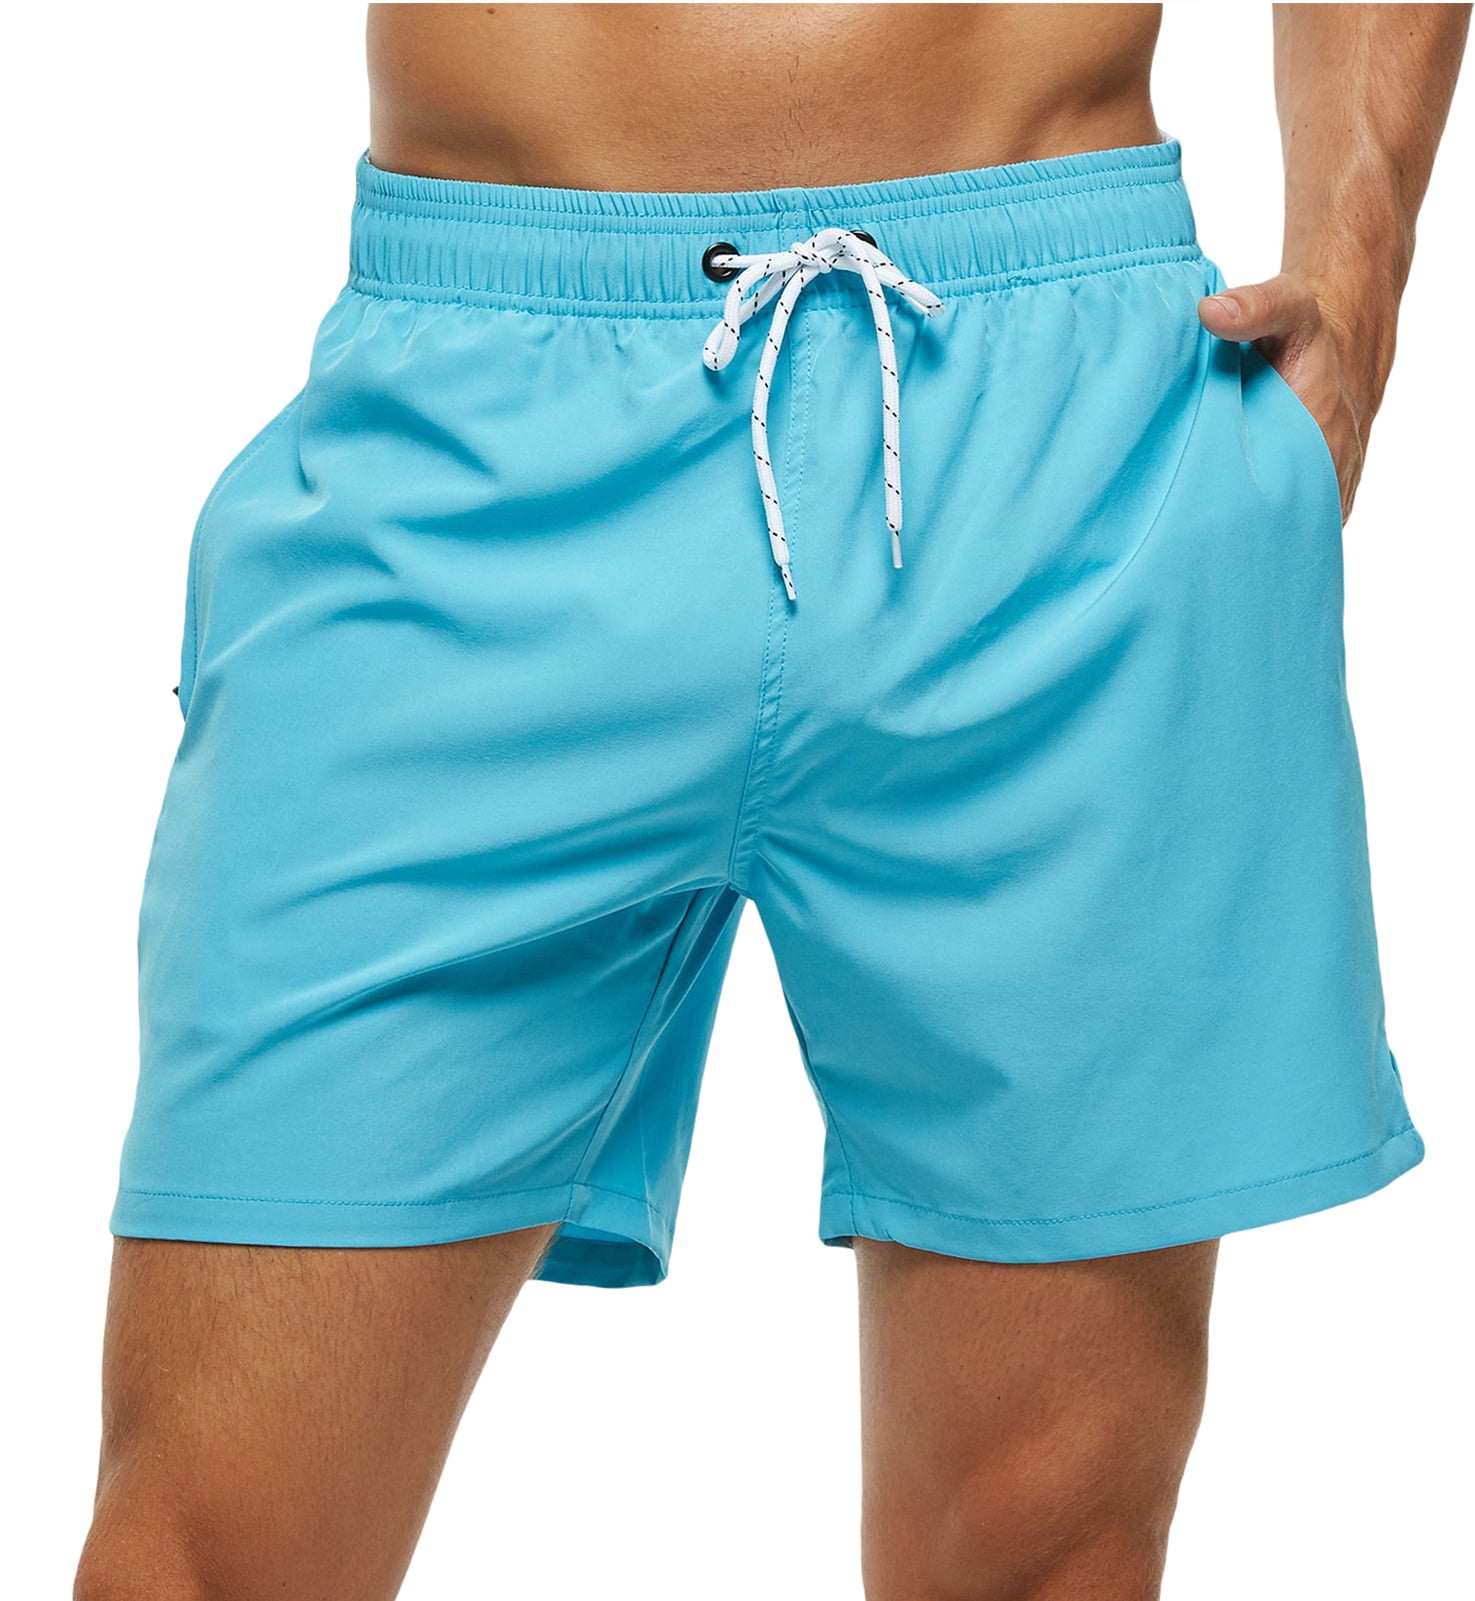 Tyhengta Men's Swim Trunks Quick Dry Beach Shorts with Zipper Pockets ...